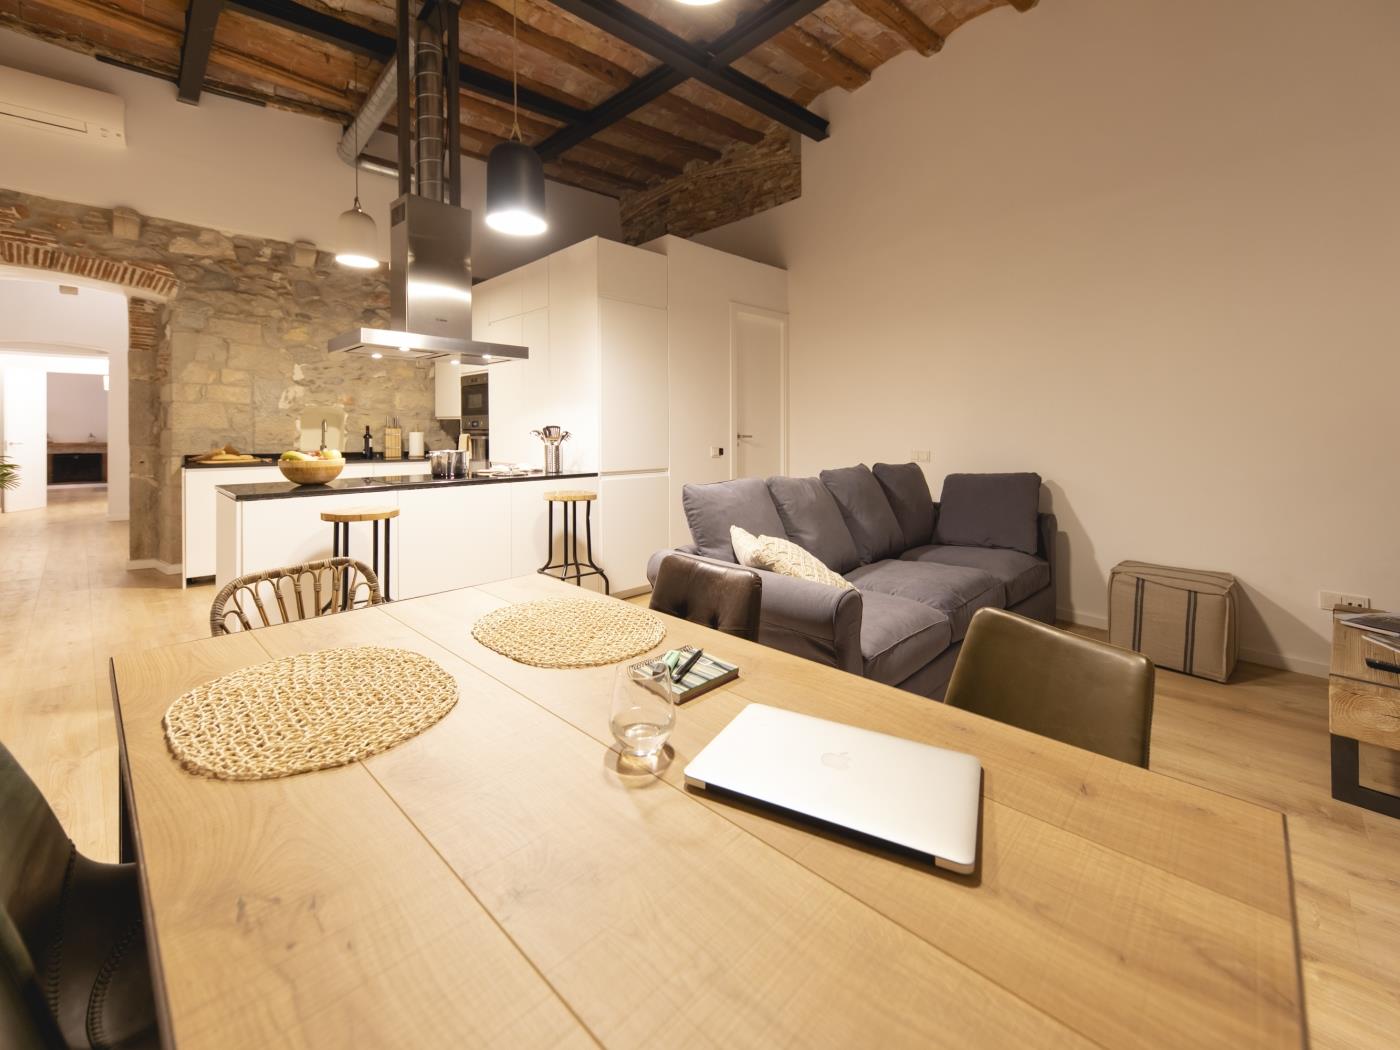 Bravissimo Bali, preciós apartament, 2 habitacions a Girona